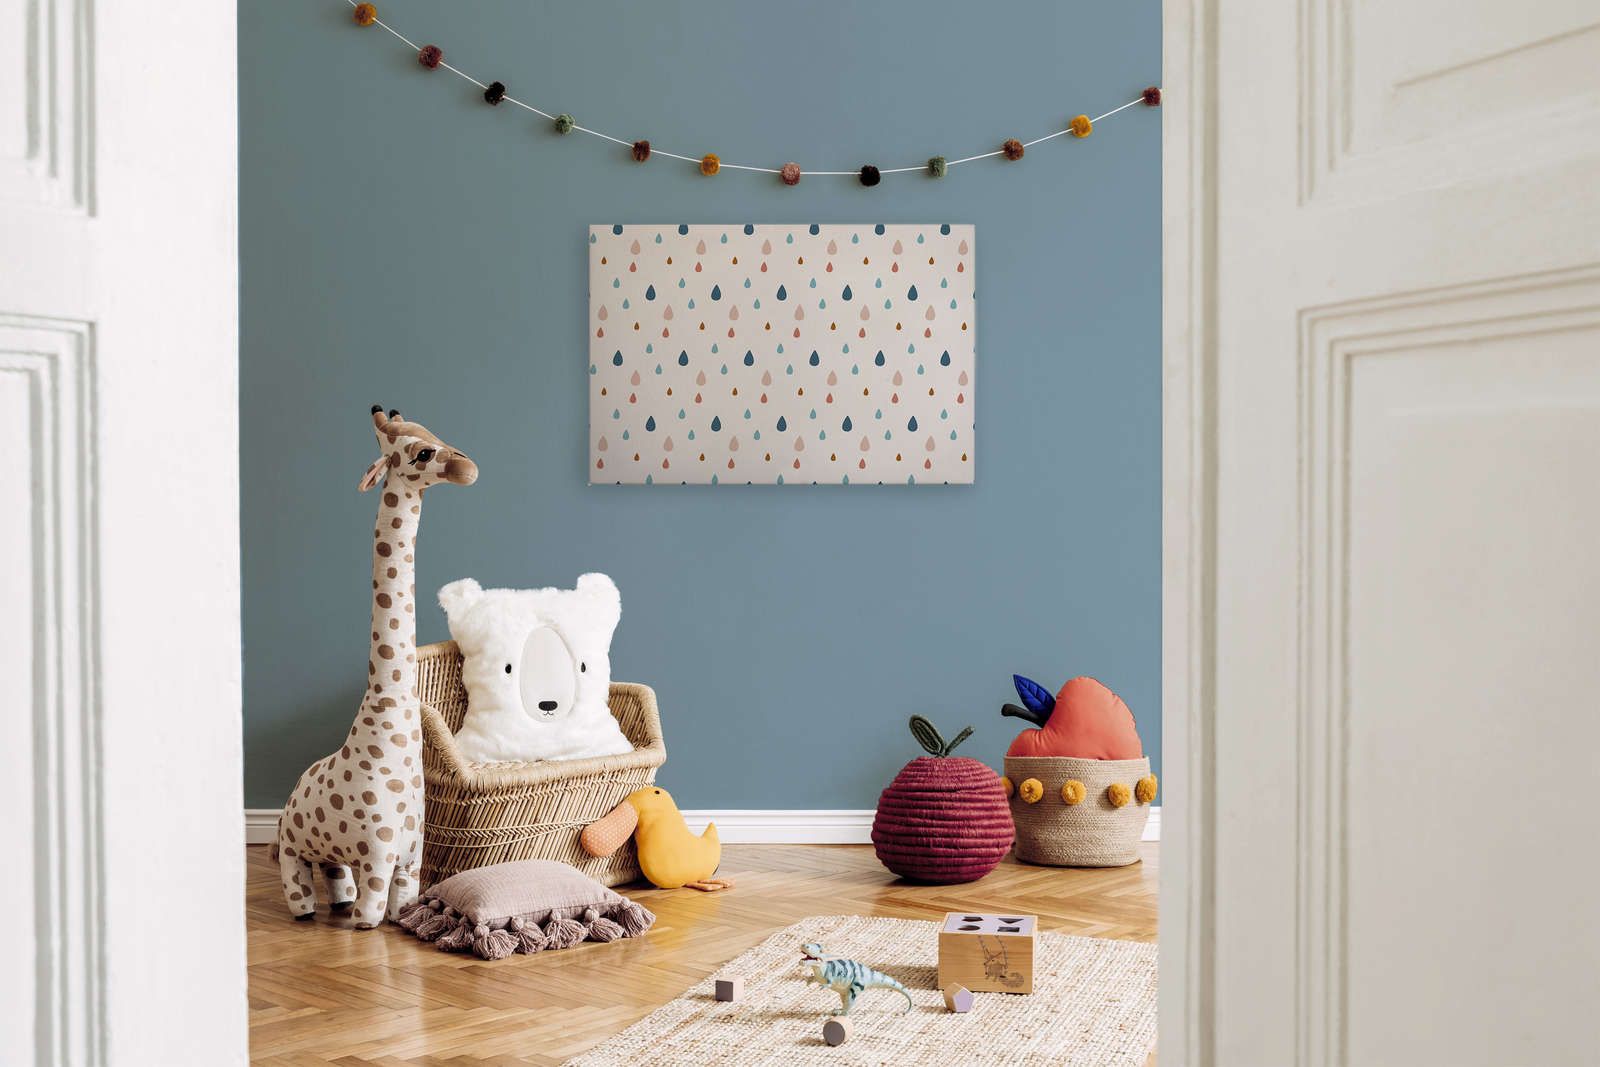             Lienzo para habitación infantil con gotas de agua de colores - 90 cm x 60 cm
        